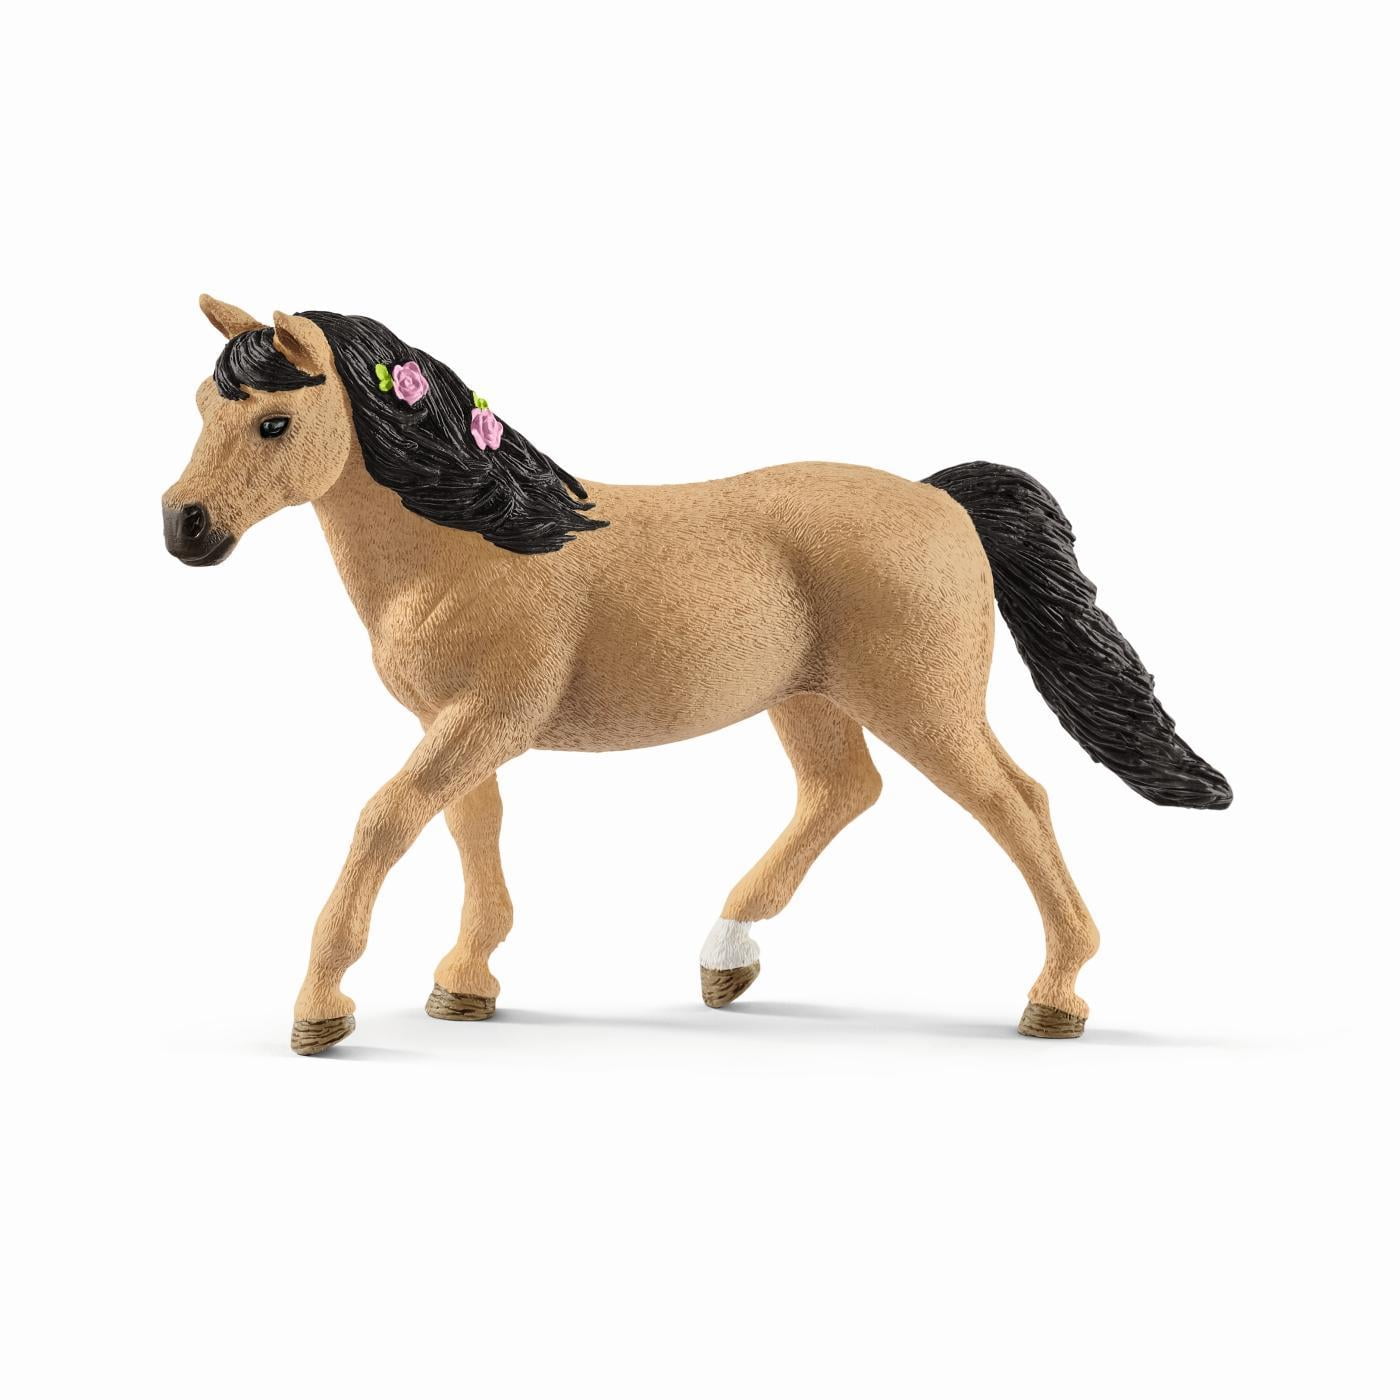 Schleich WELSH PONY STALLION  plastic toy farm pet male animal  HORSE  NEW 